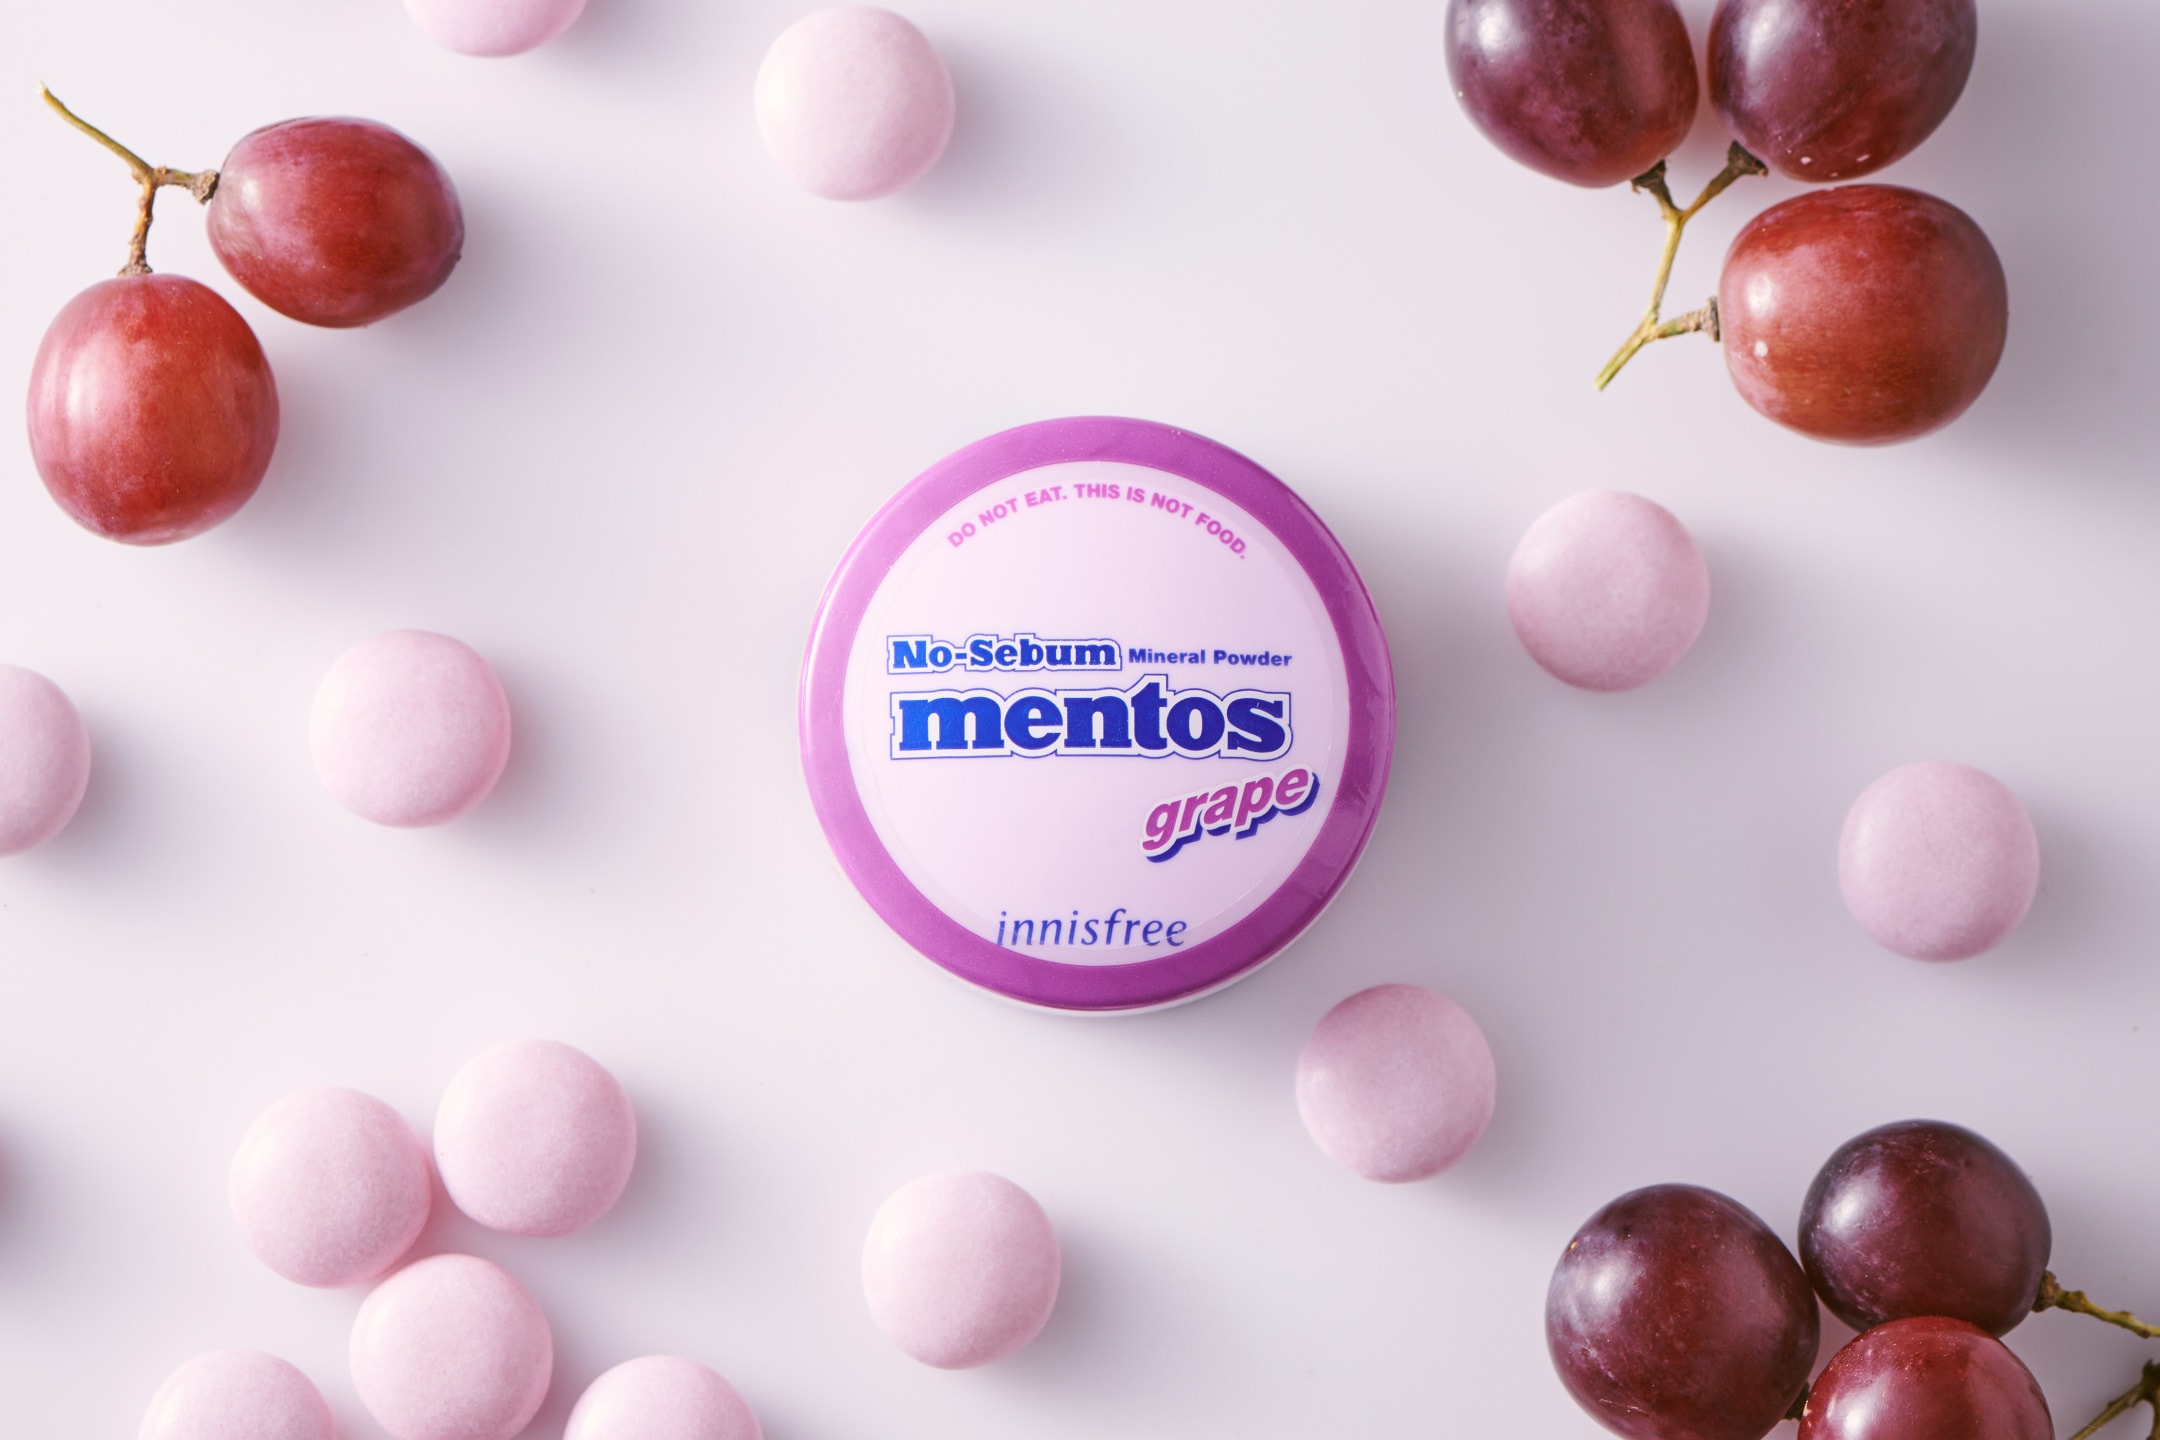 innisfree Mentos No Sebum Mineral Powder K-beauty Collaborations Fruits Grape Cherry Melon Mint Peach Lemon 